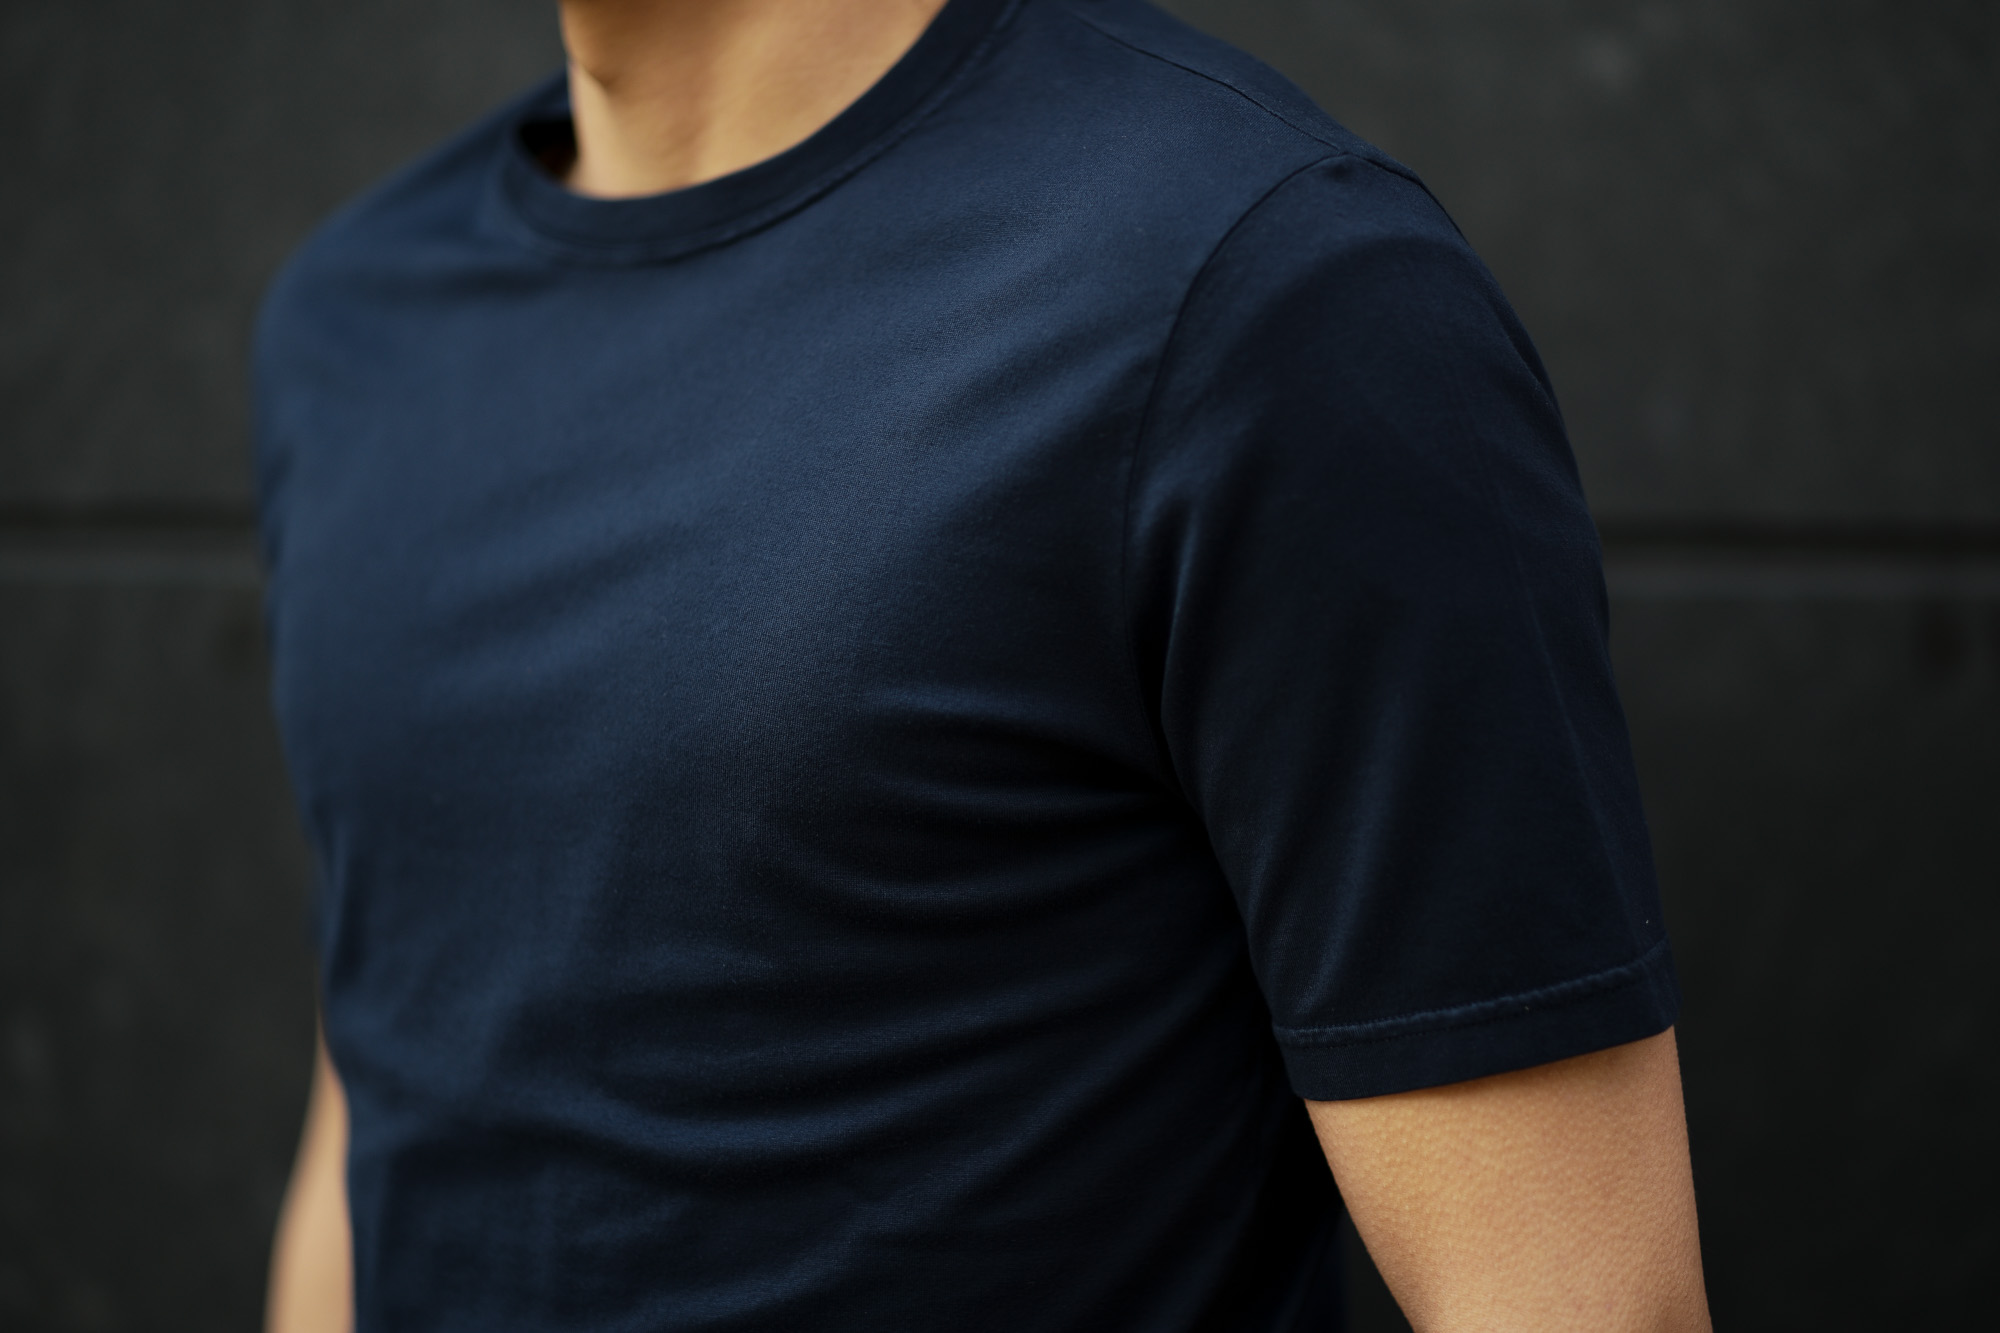 FEDELI(フェデーリ) Crew Neck T-shirt (クルーネック Tシャツ) ギザコットン Tシャツ NAVY (ネイビー・626) made in italy (イタリア製) 2020 春夏新作 愛知 名古屋 altoediritto アルトエデリット TEE